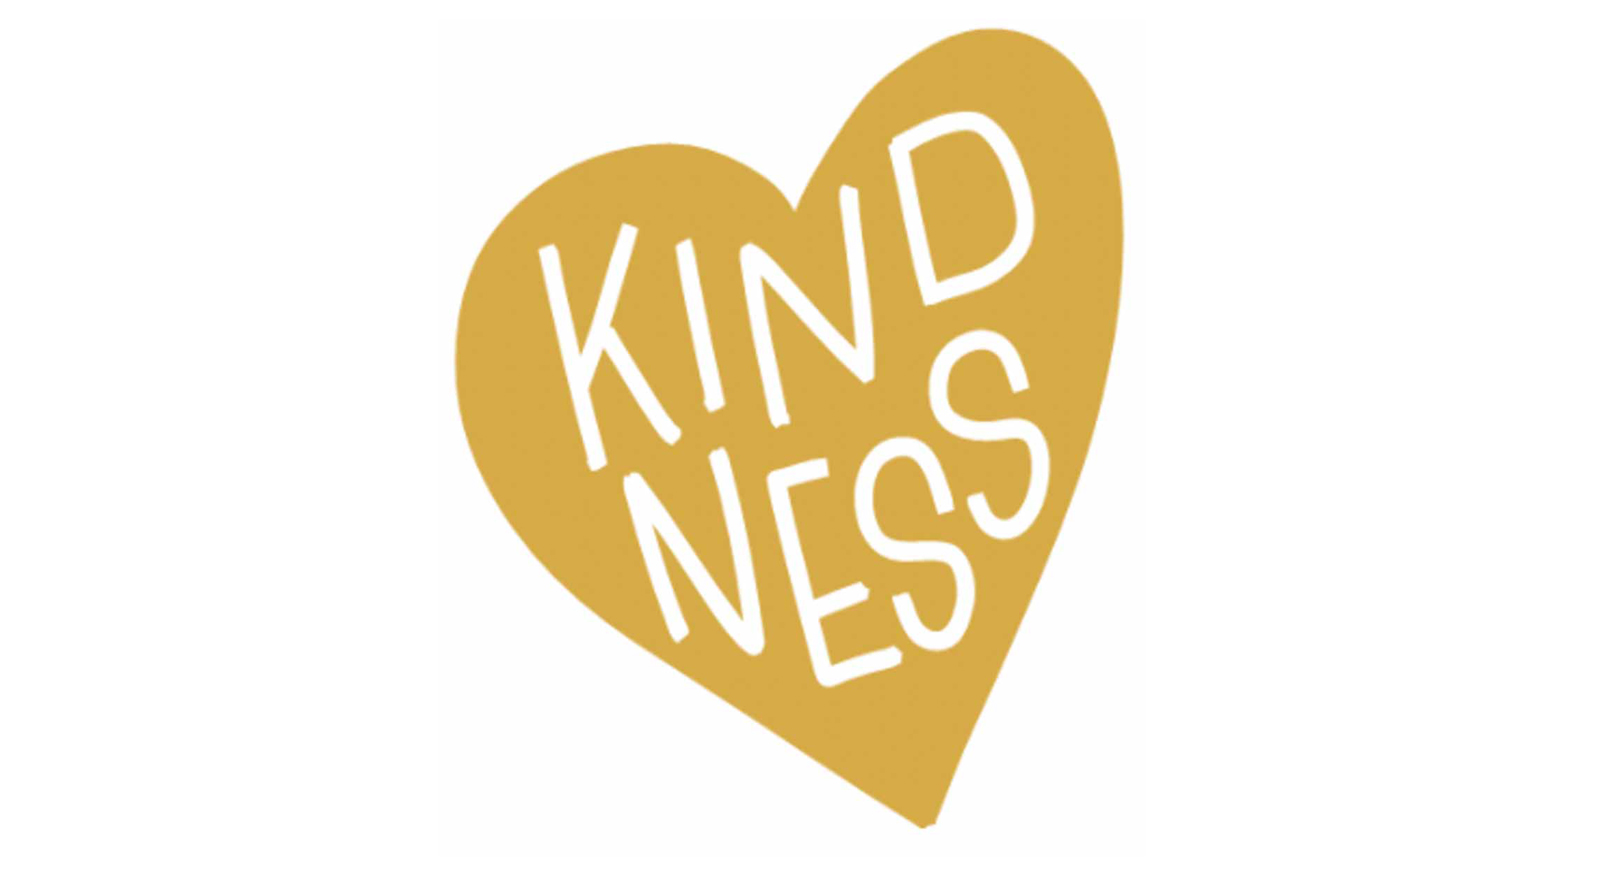 Kindness image.